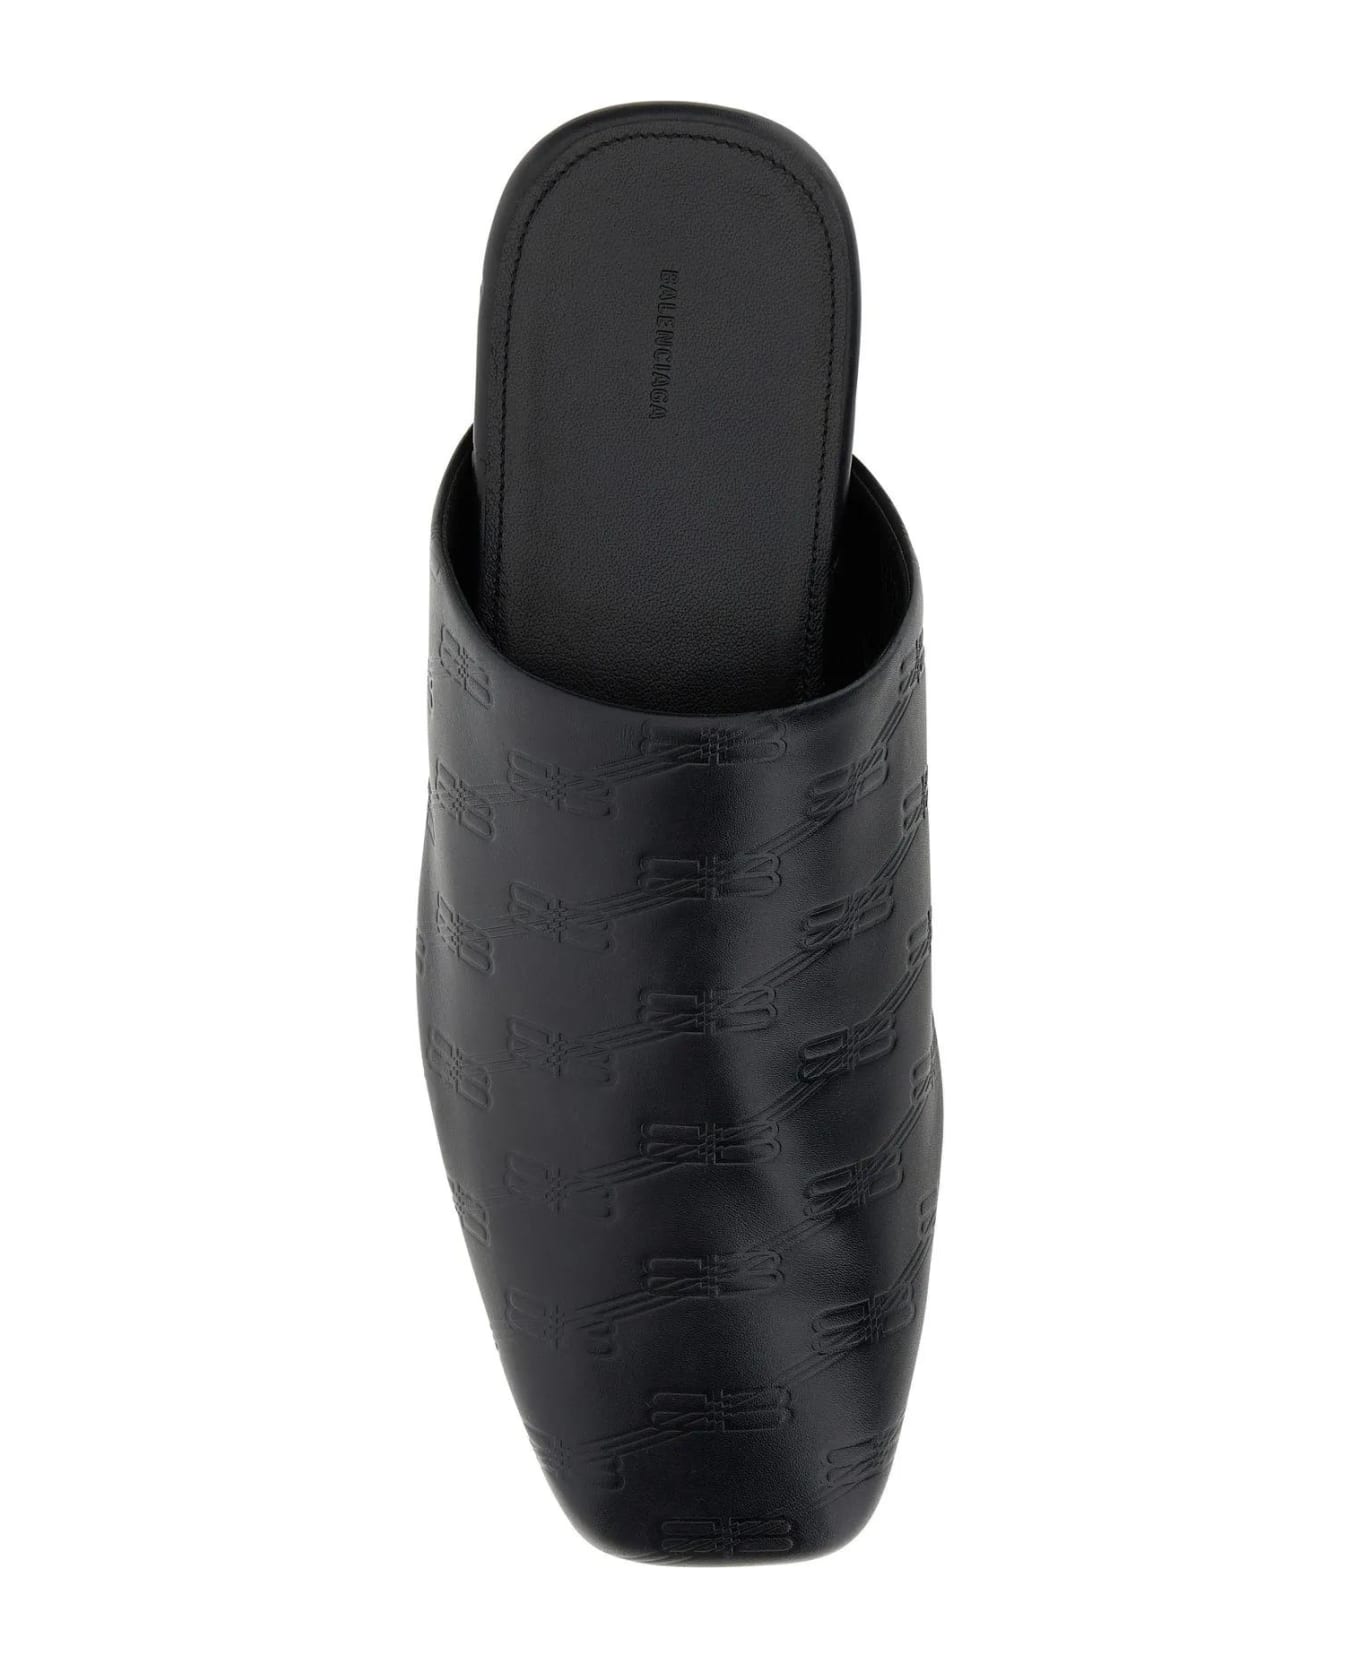 Balenciaga Black Leather Slippers - Nero